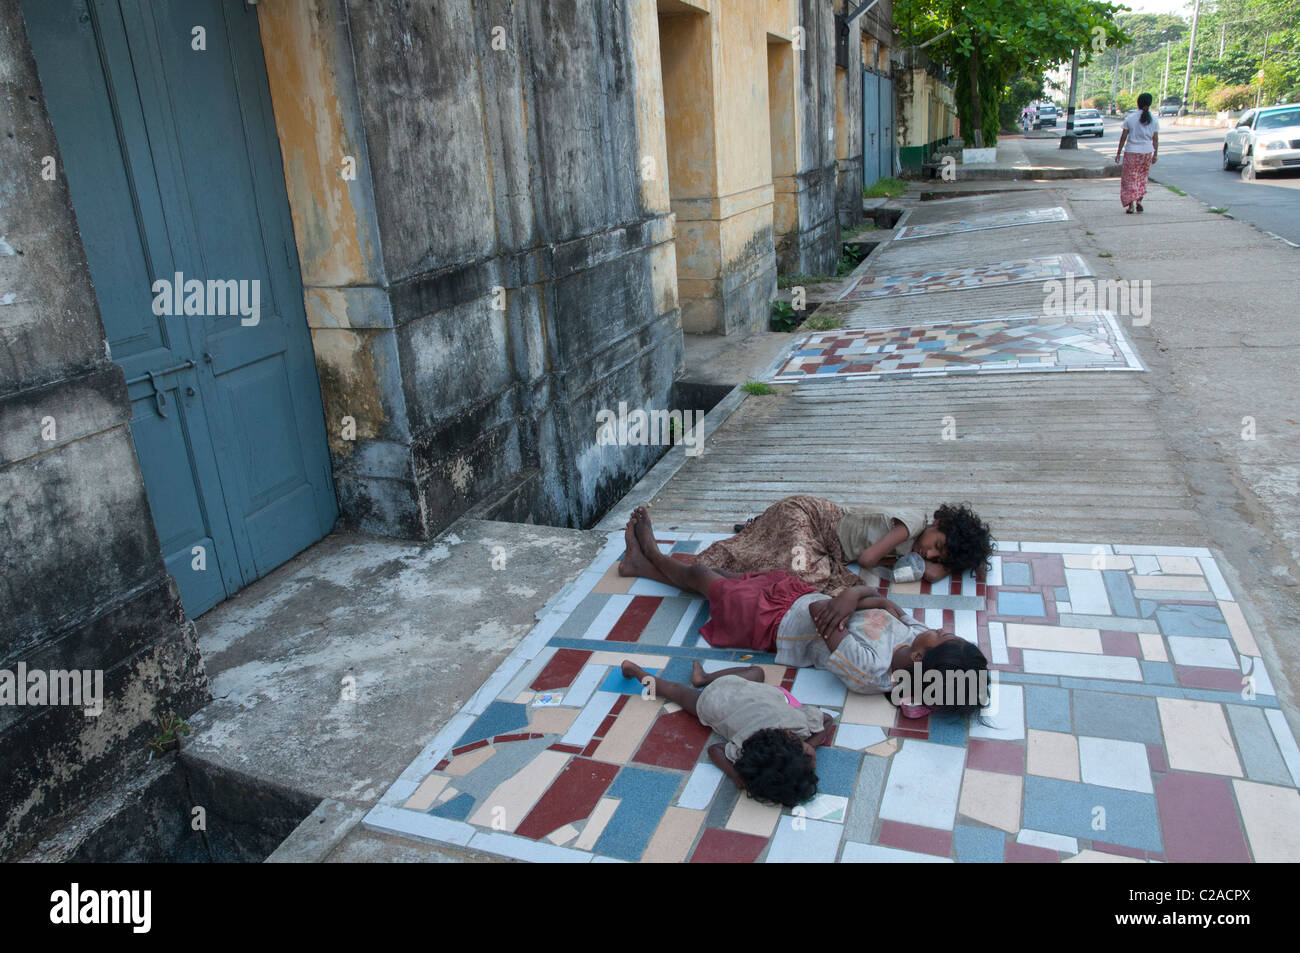 Homeless children sleeping rough on the pavement. yangon. Myanmar Stock Photo